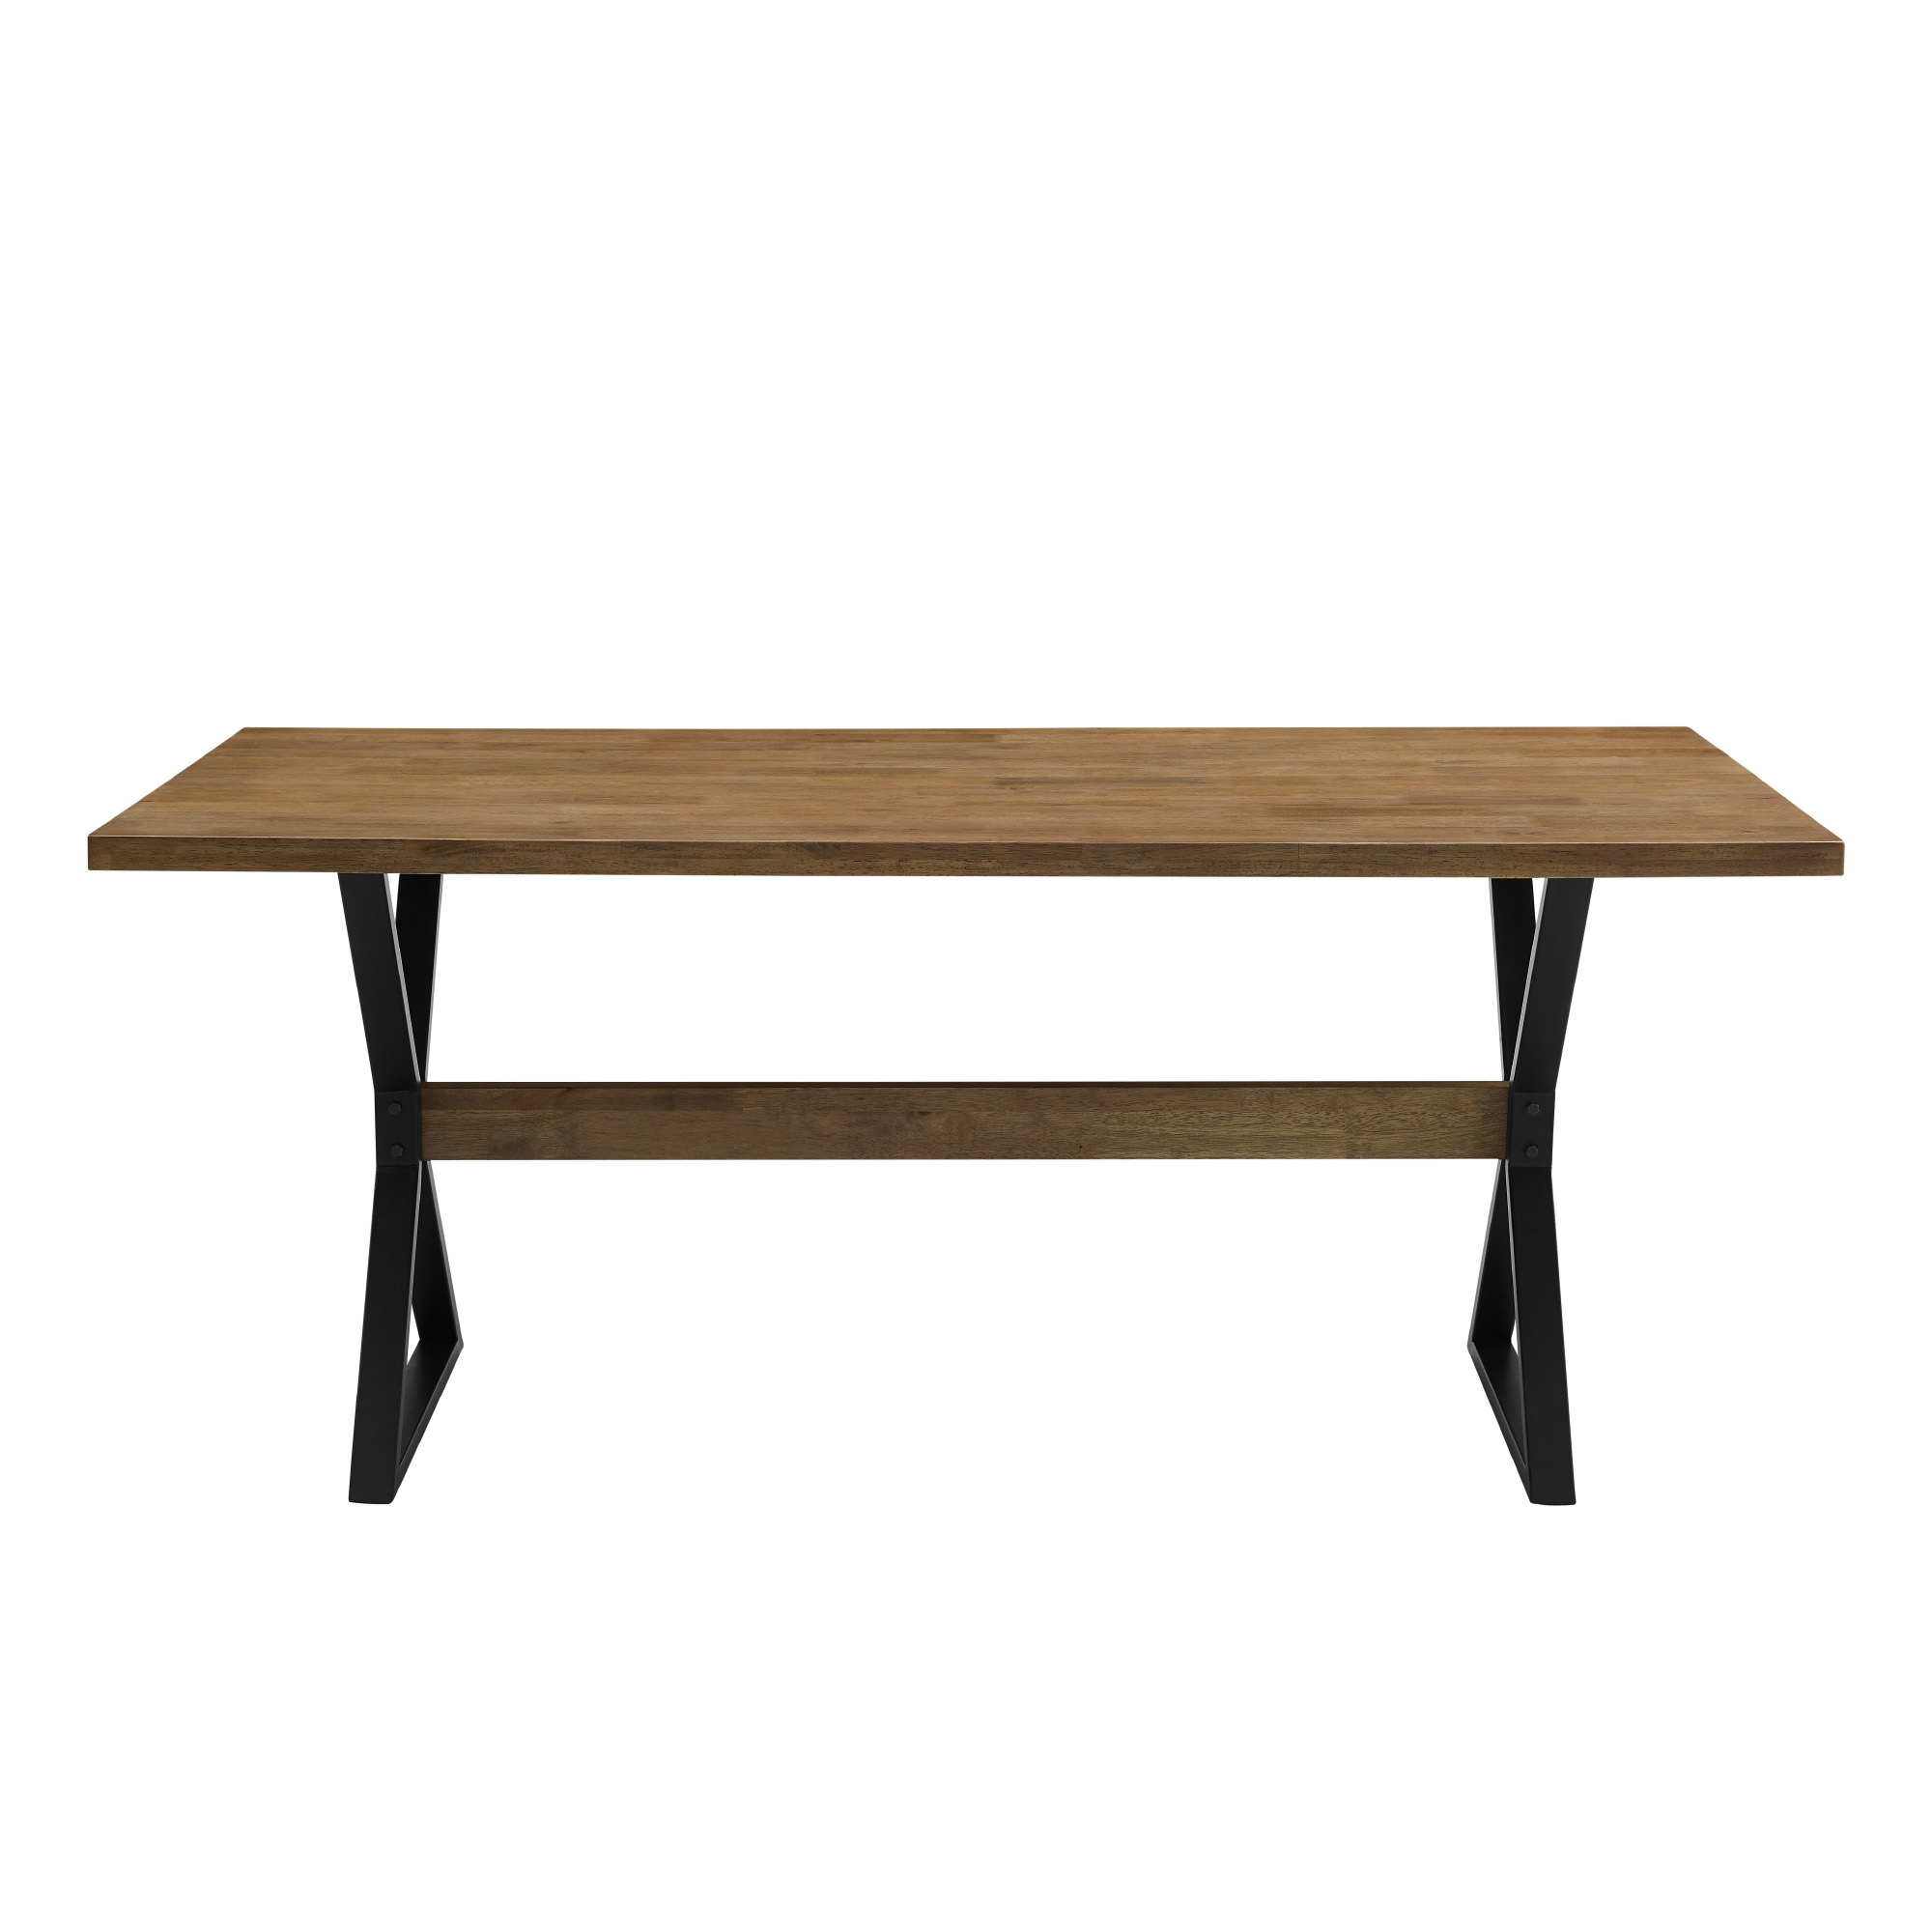 Amherst 72" X Leg Dining Table - Rustic Oak - Image 1